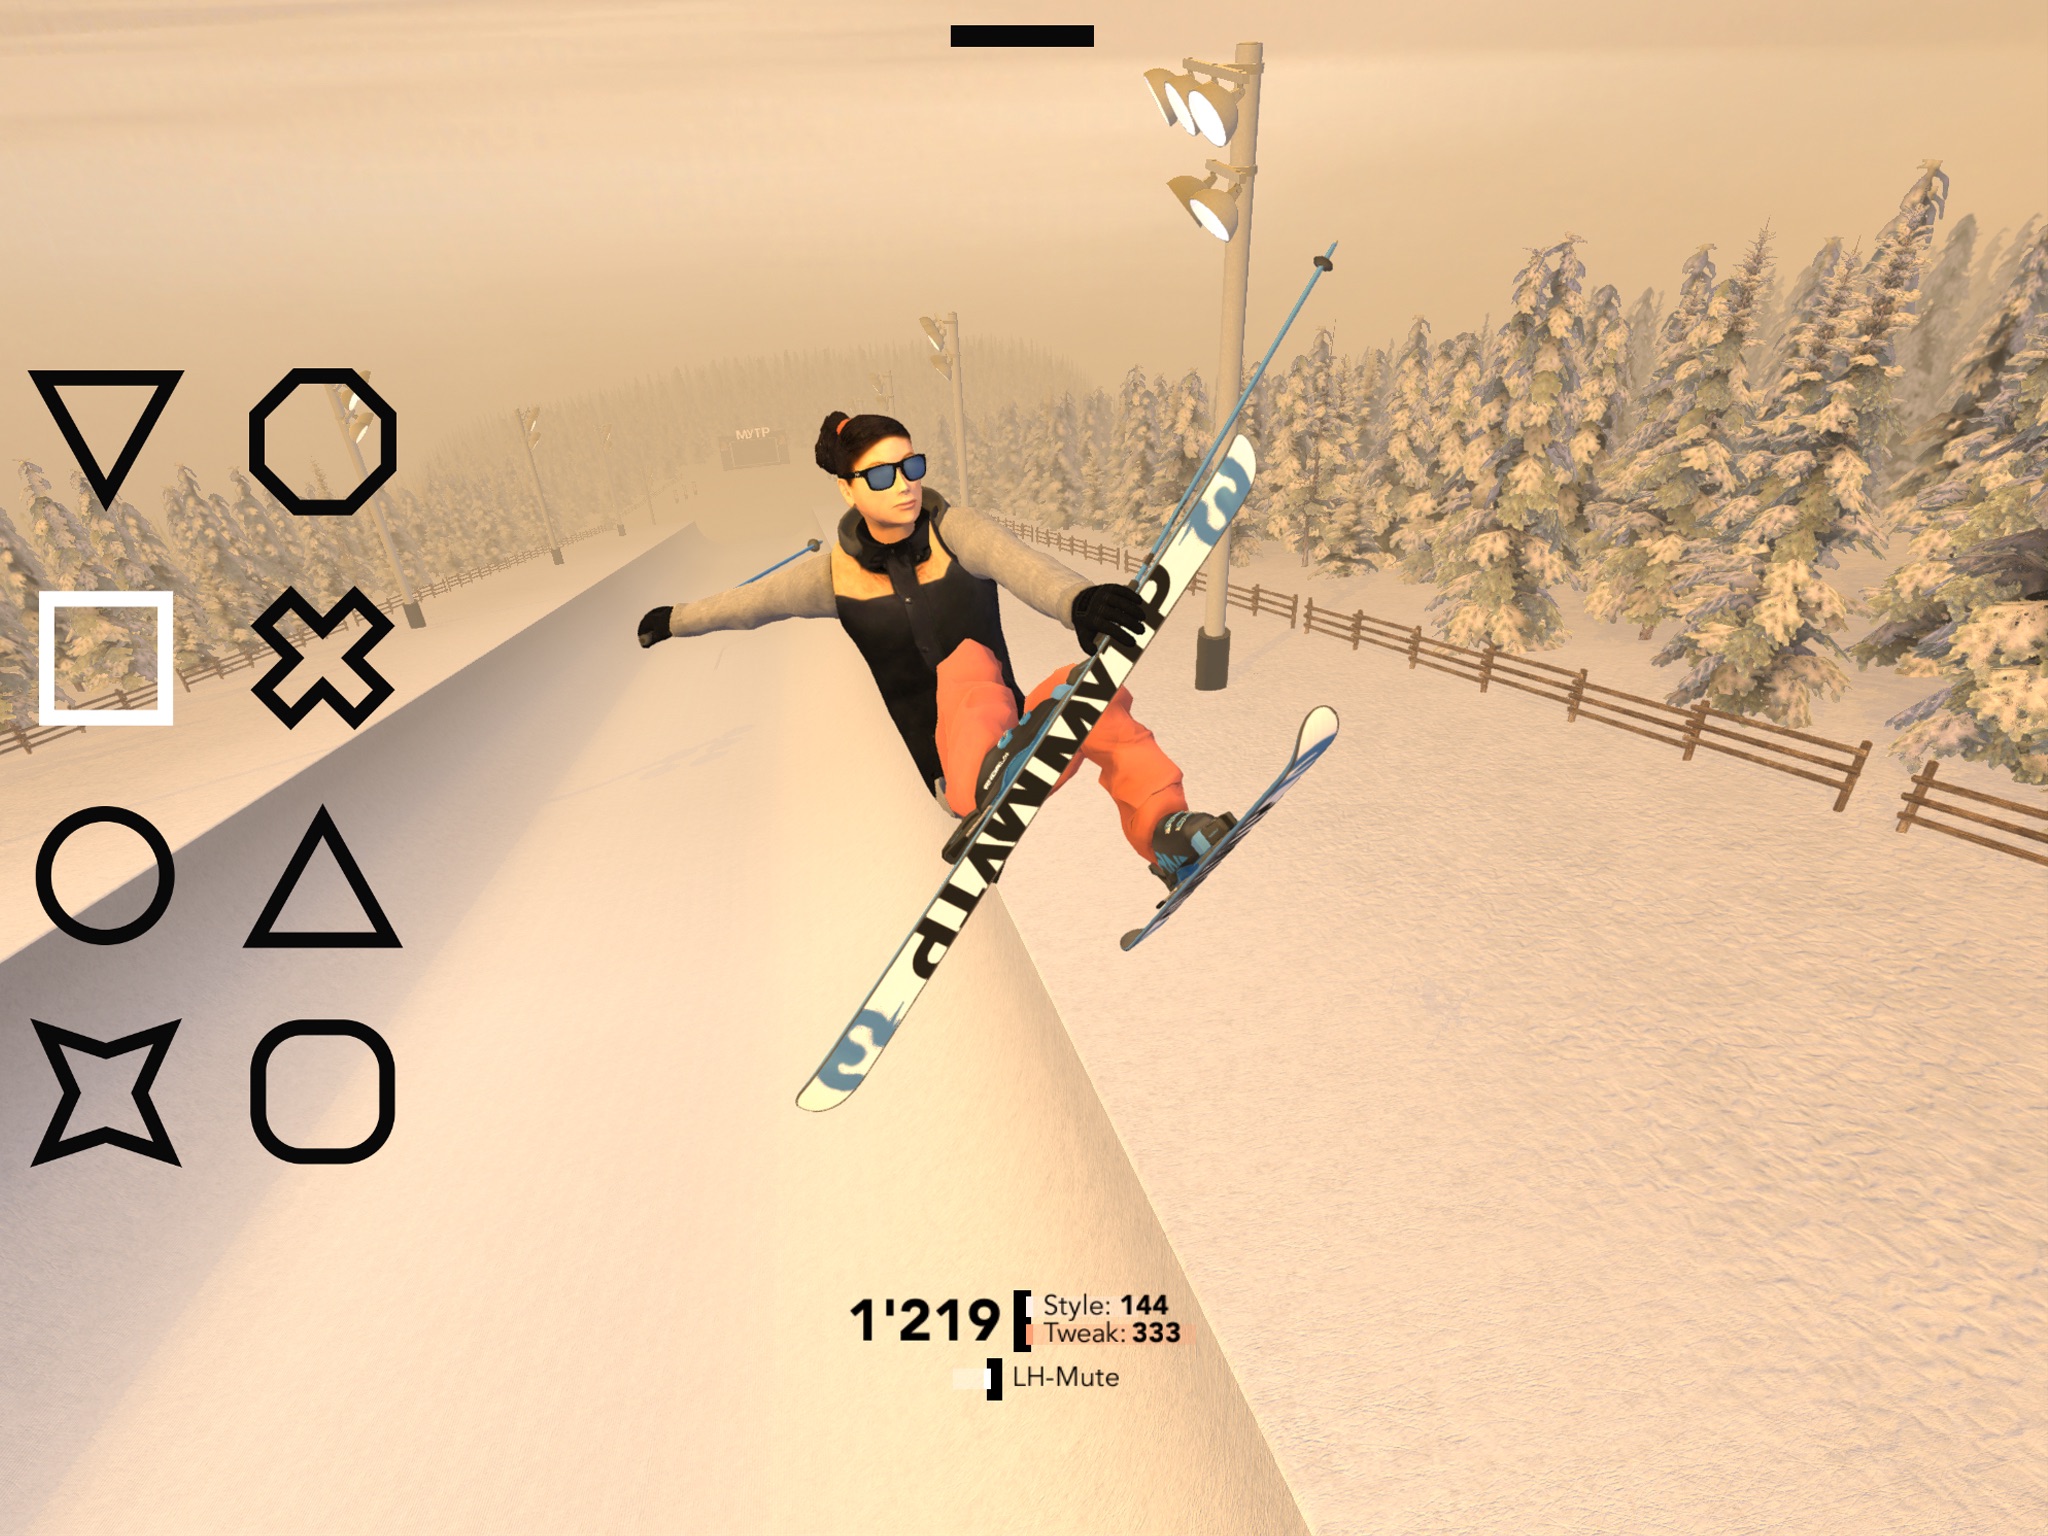 MyTP 3 - Snowboard, Freeski and Skateboard screenshot 3